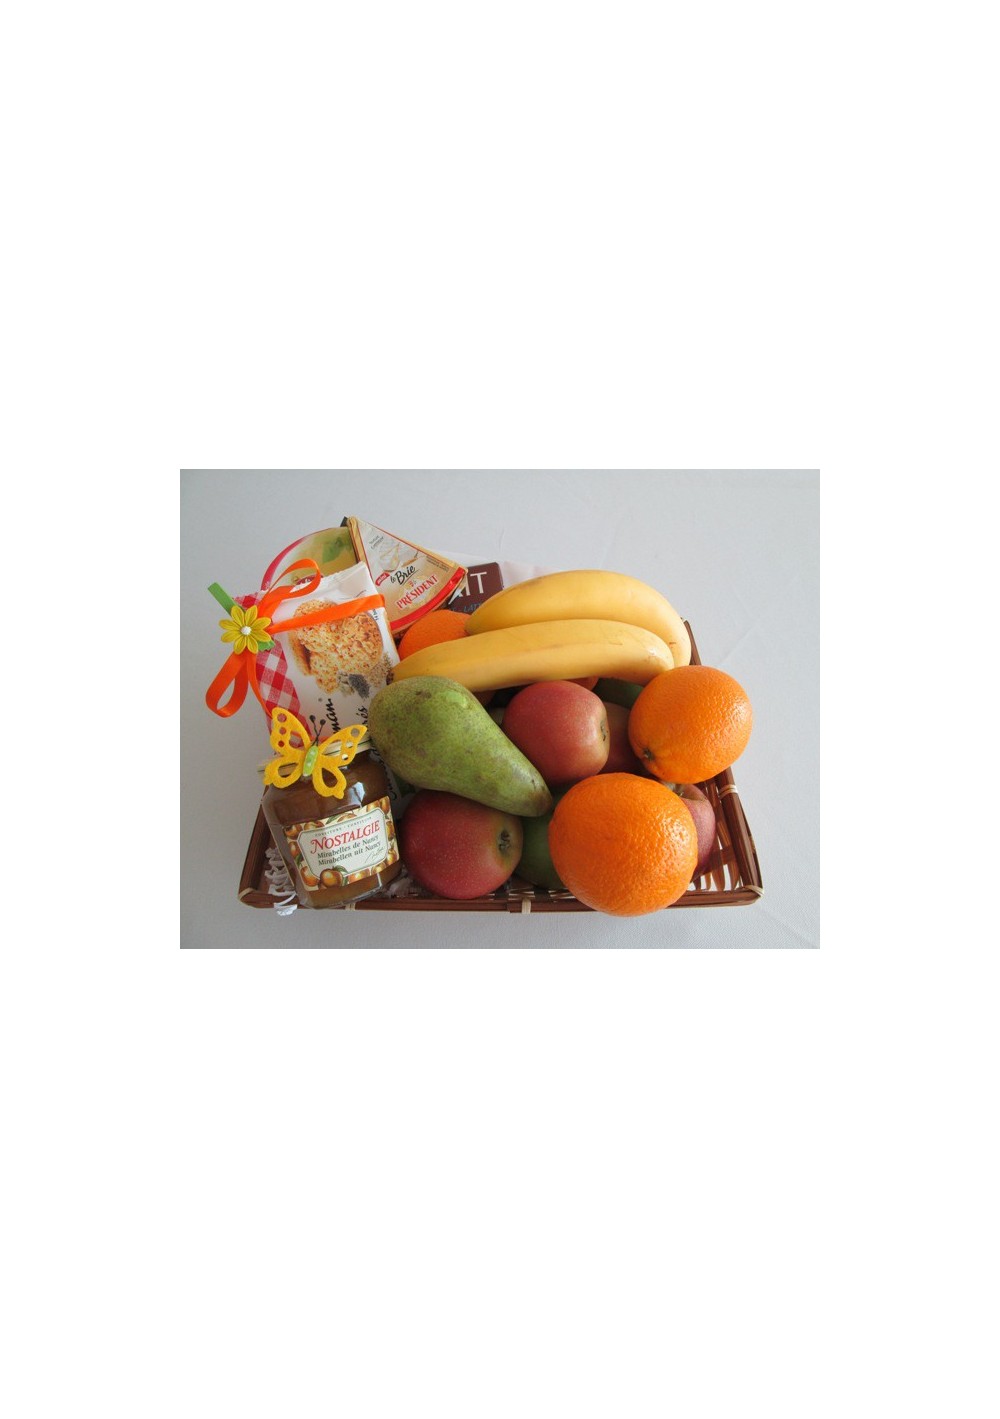 Gift basket exotic fruits